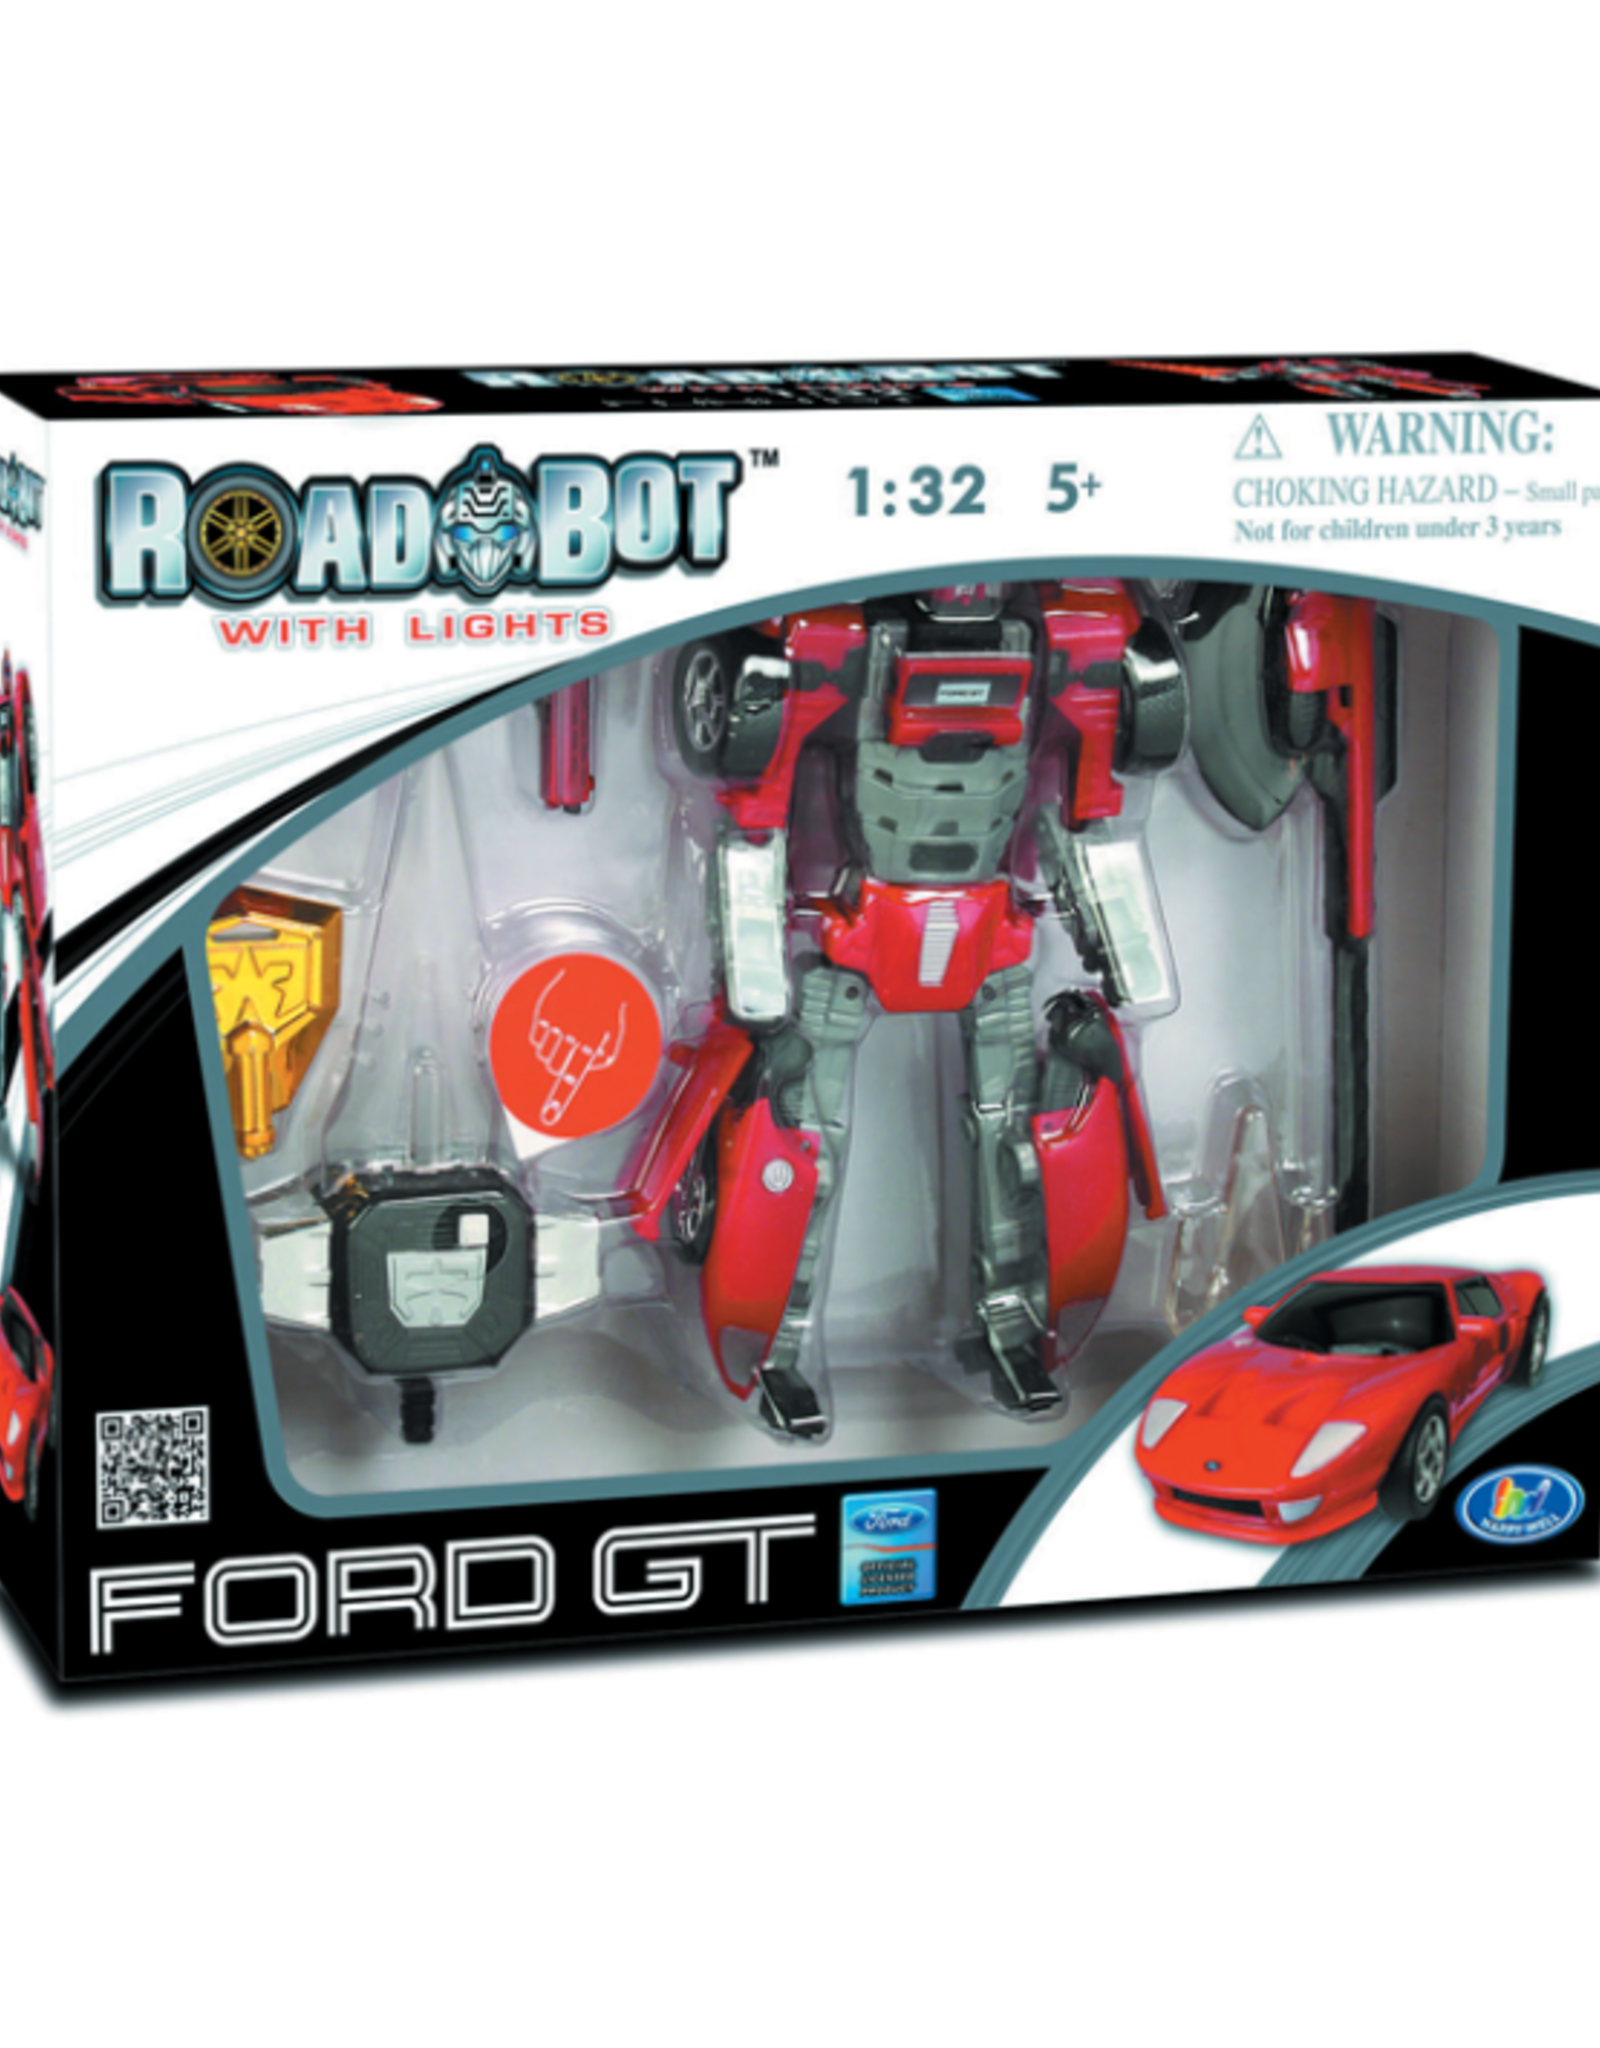 Playwell Ford GT-Roadbot